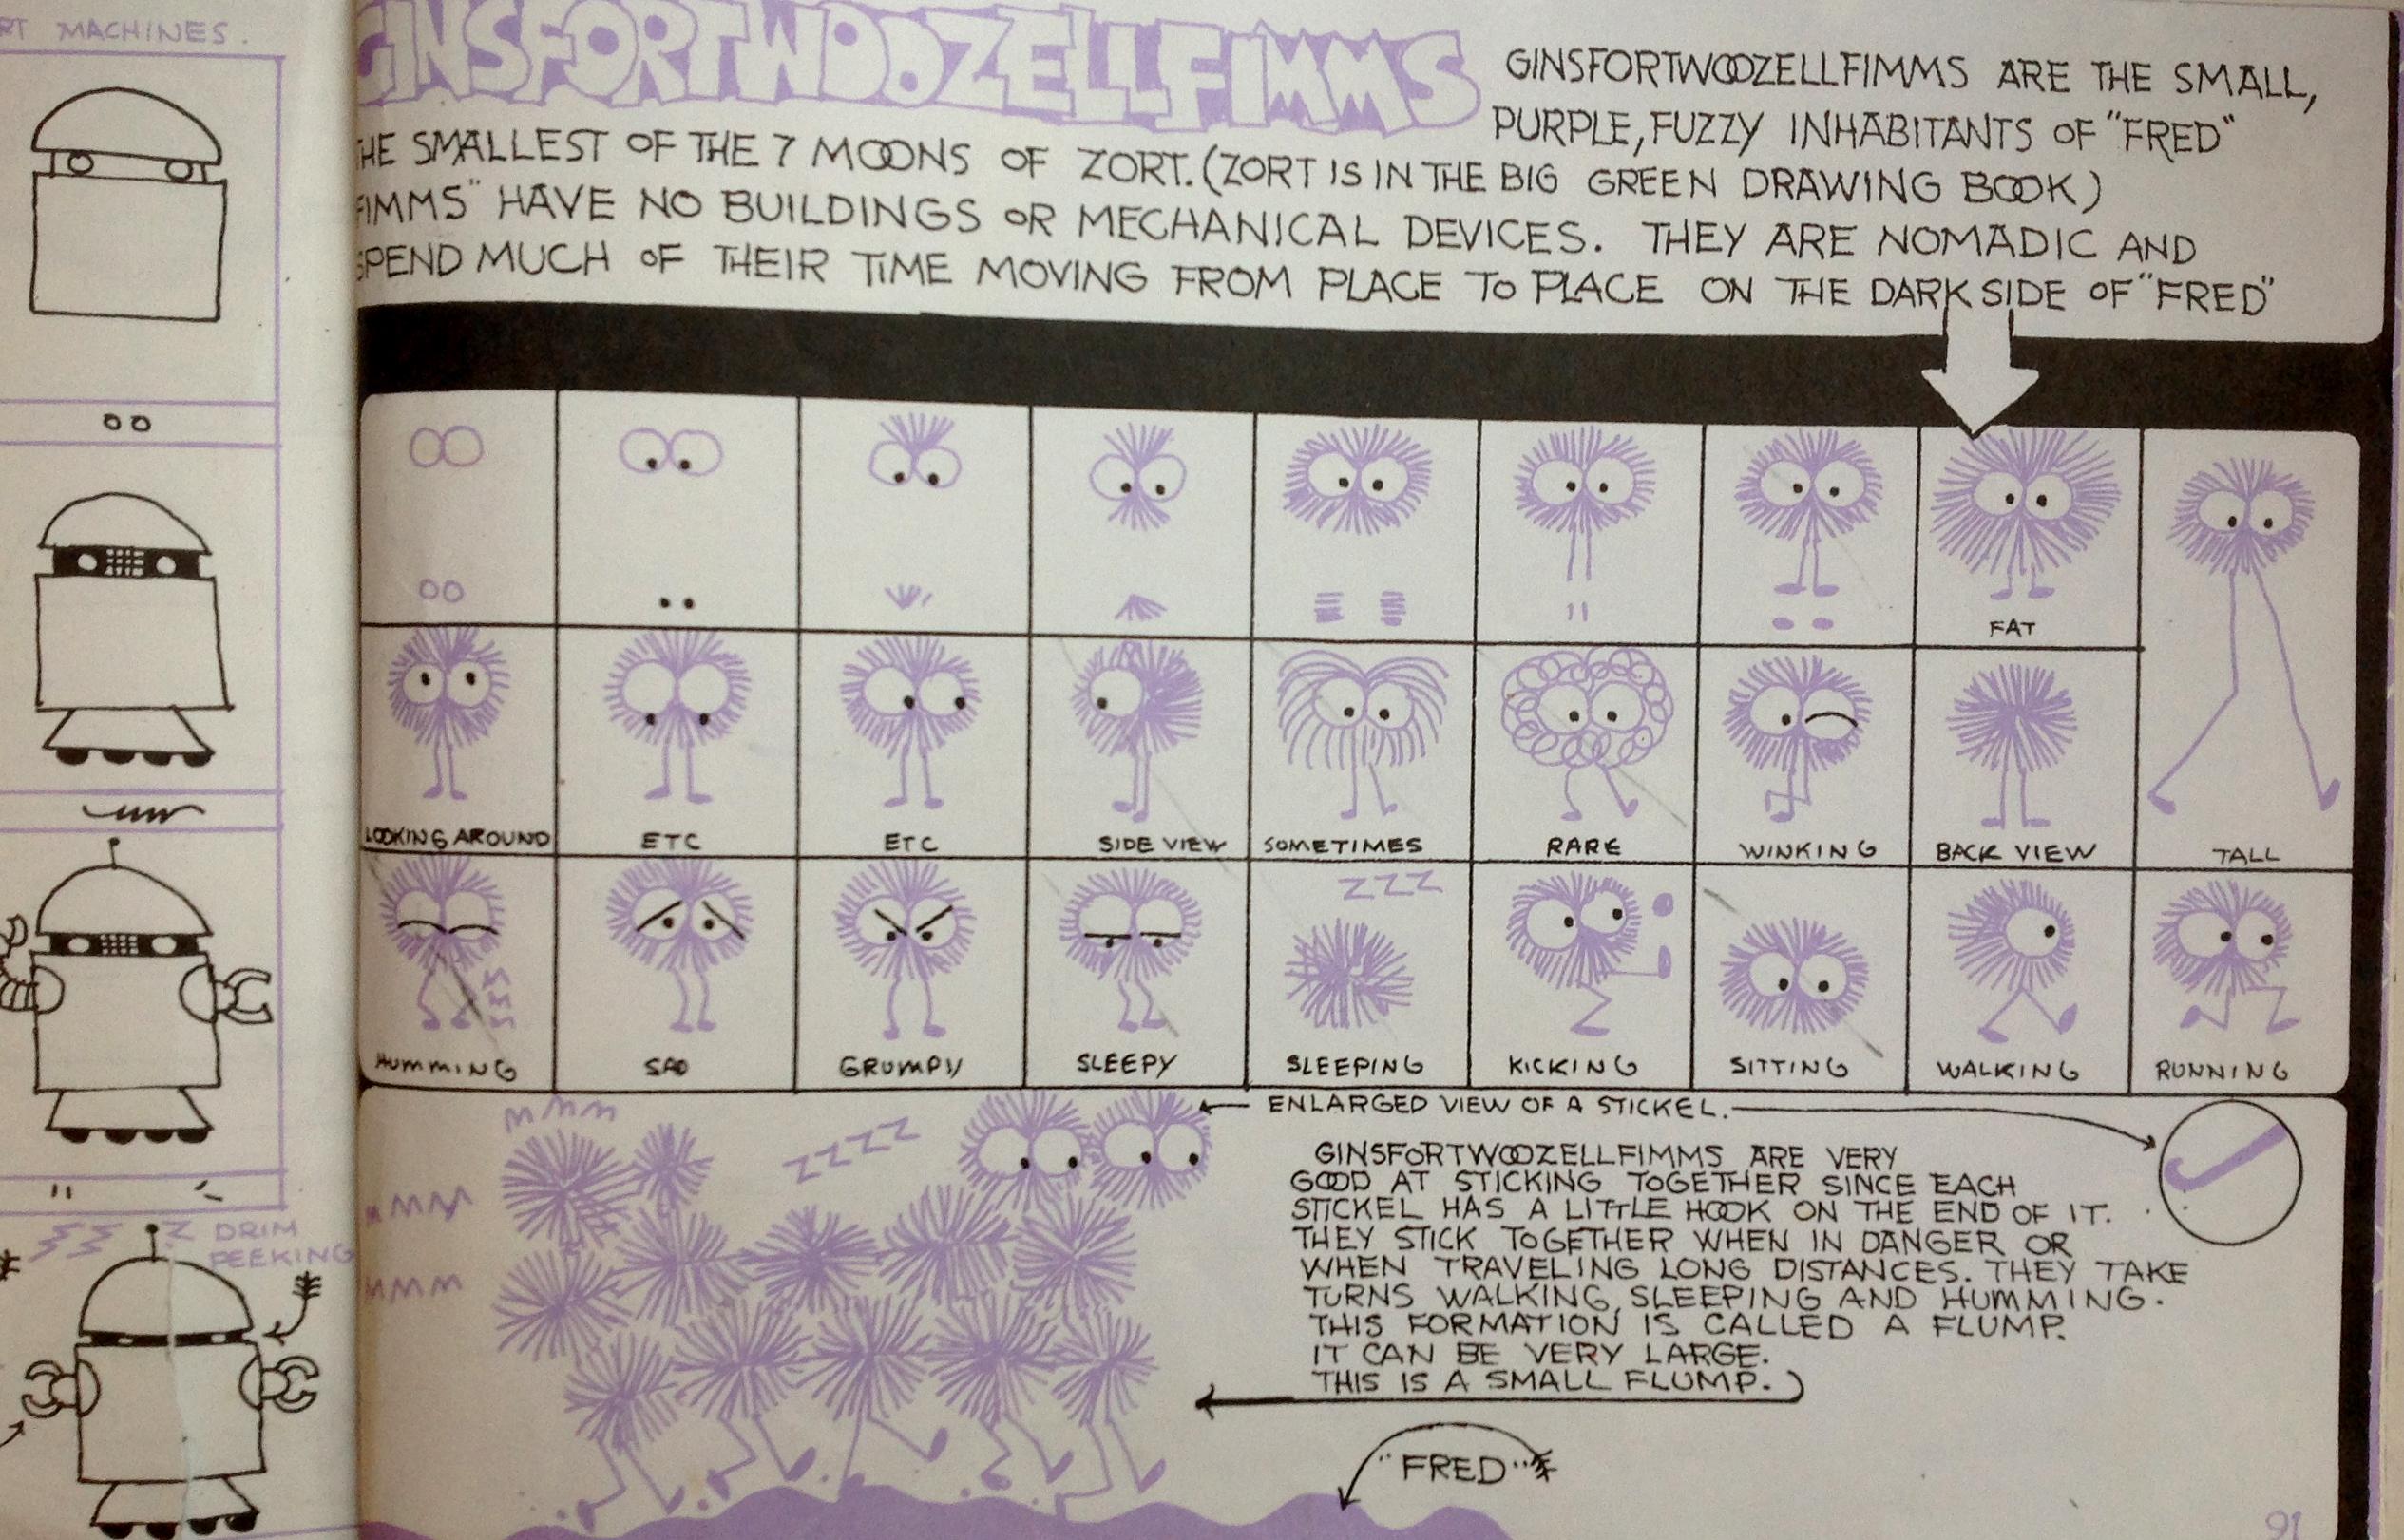 Aimee on X: 1981, #EdEmberley's Big Purple #Drawing #Book. #kidlitart  #childrensbook #Emberley #books #art #zort #illustration   / X